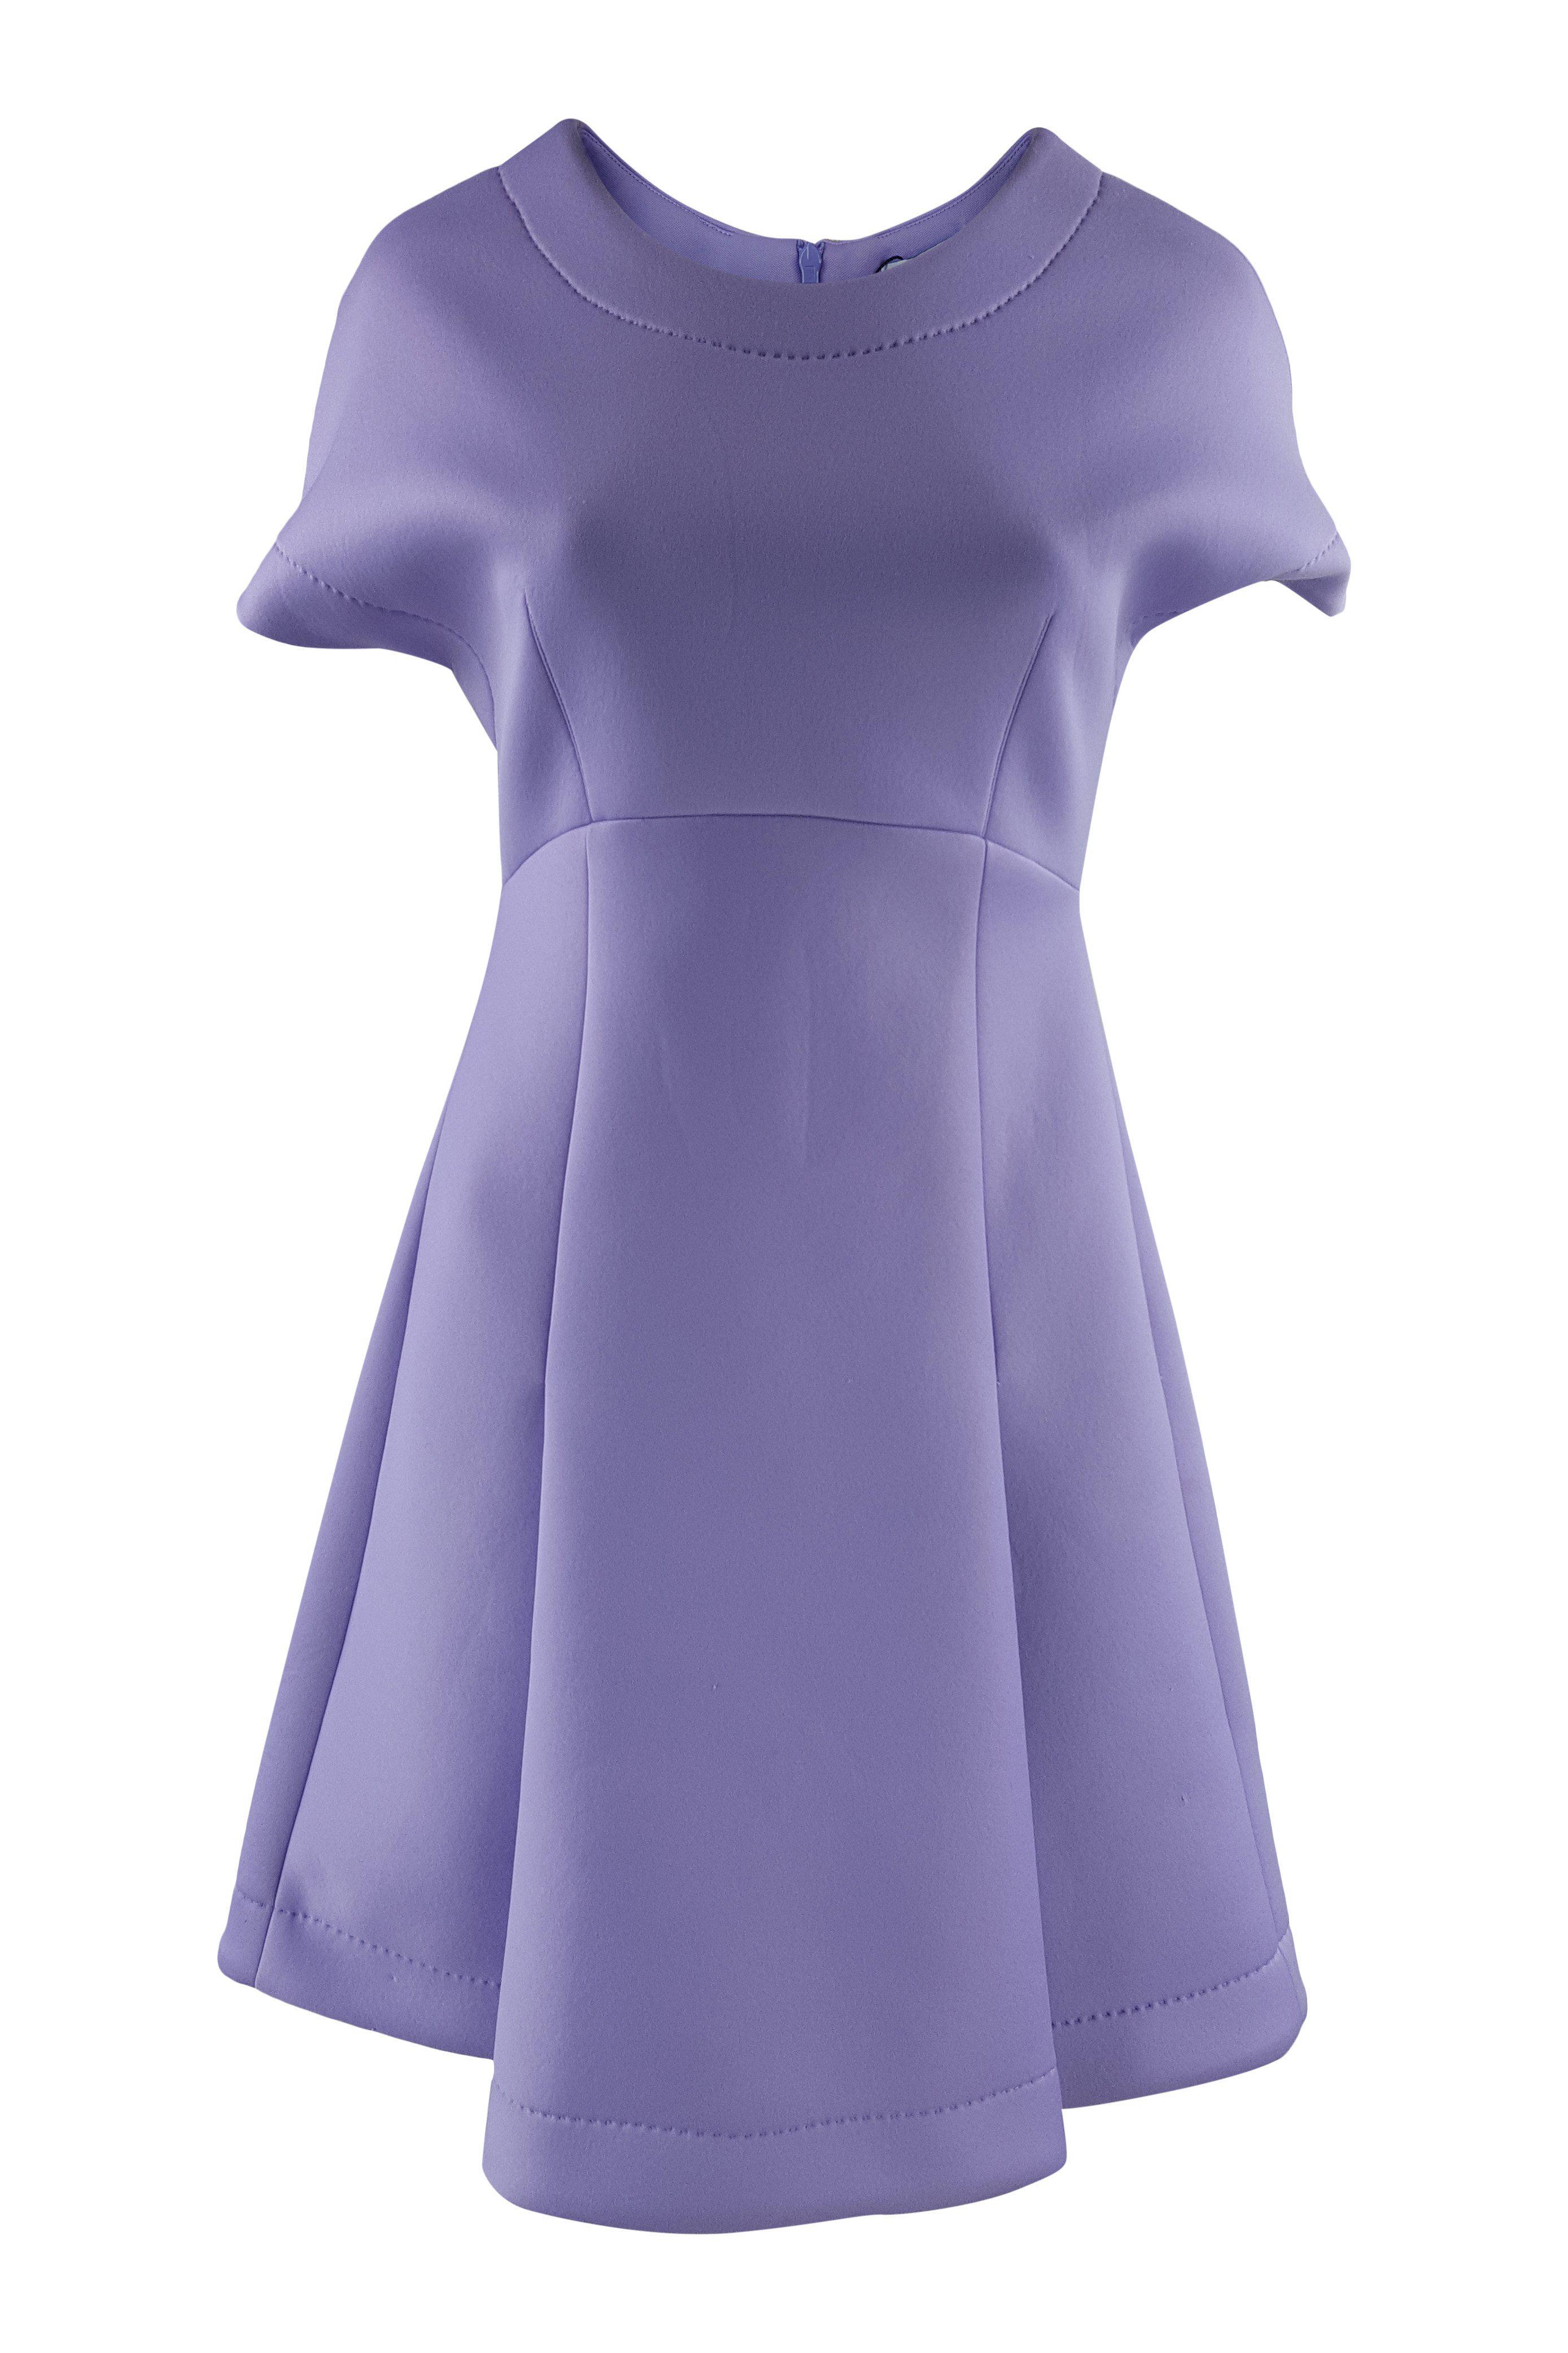 SONIA By Sonia Rykiel Purple Neoprene Skater Dress (38)-Sonia Rykiel-The Freperie